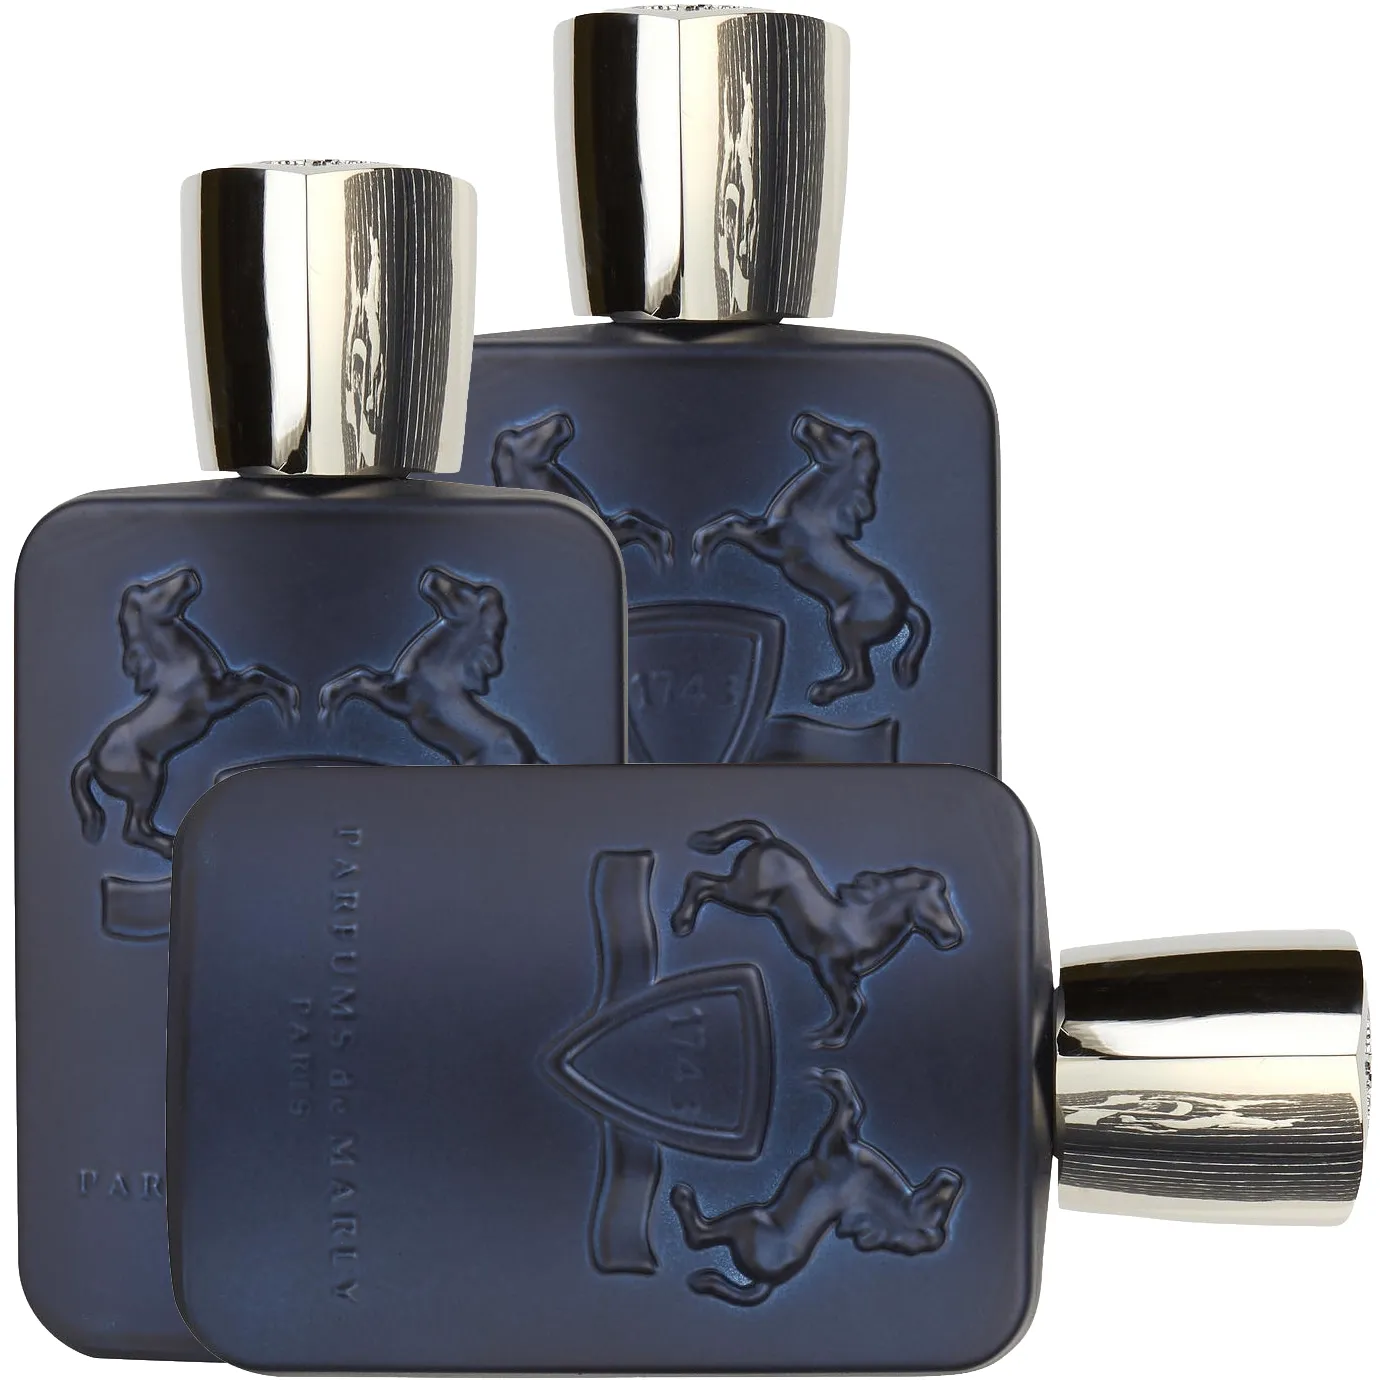 Free Layton Iconic Men's Perfume